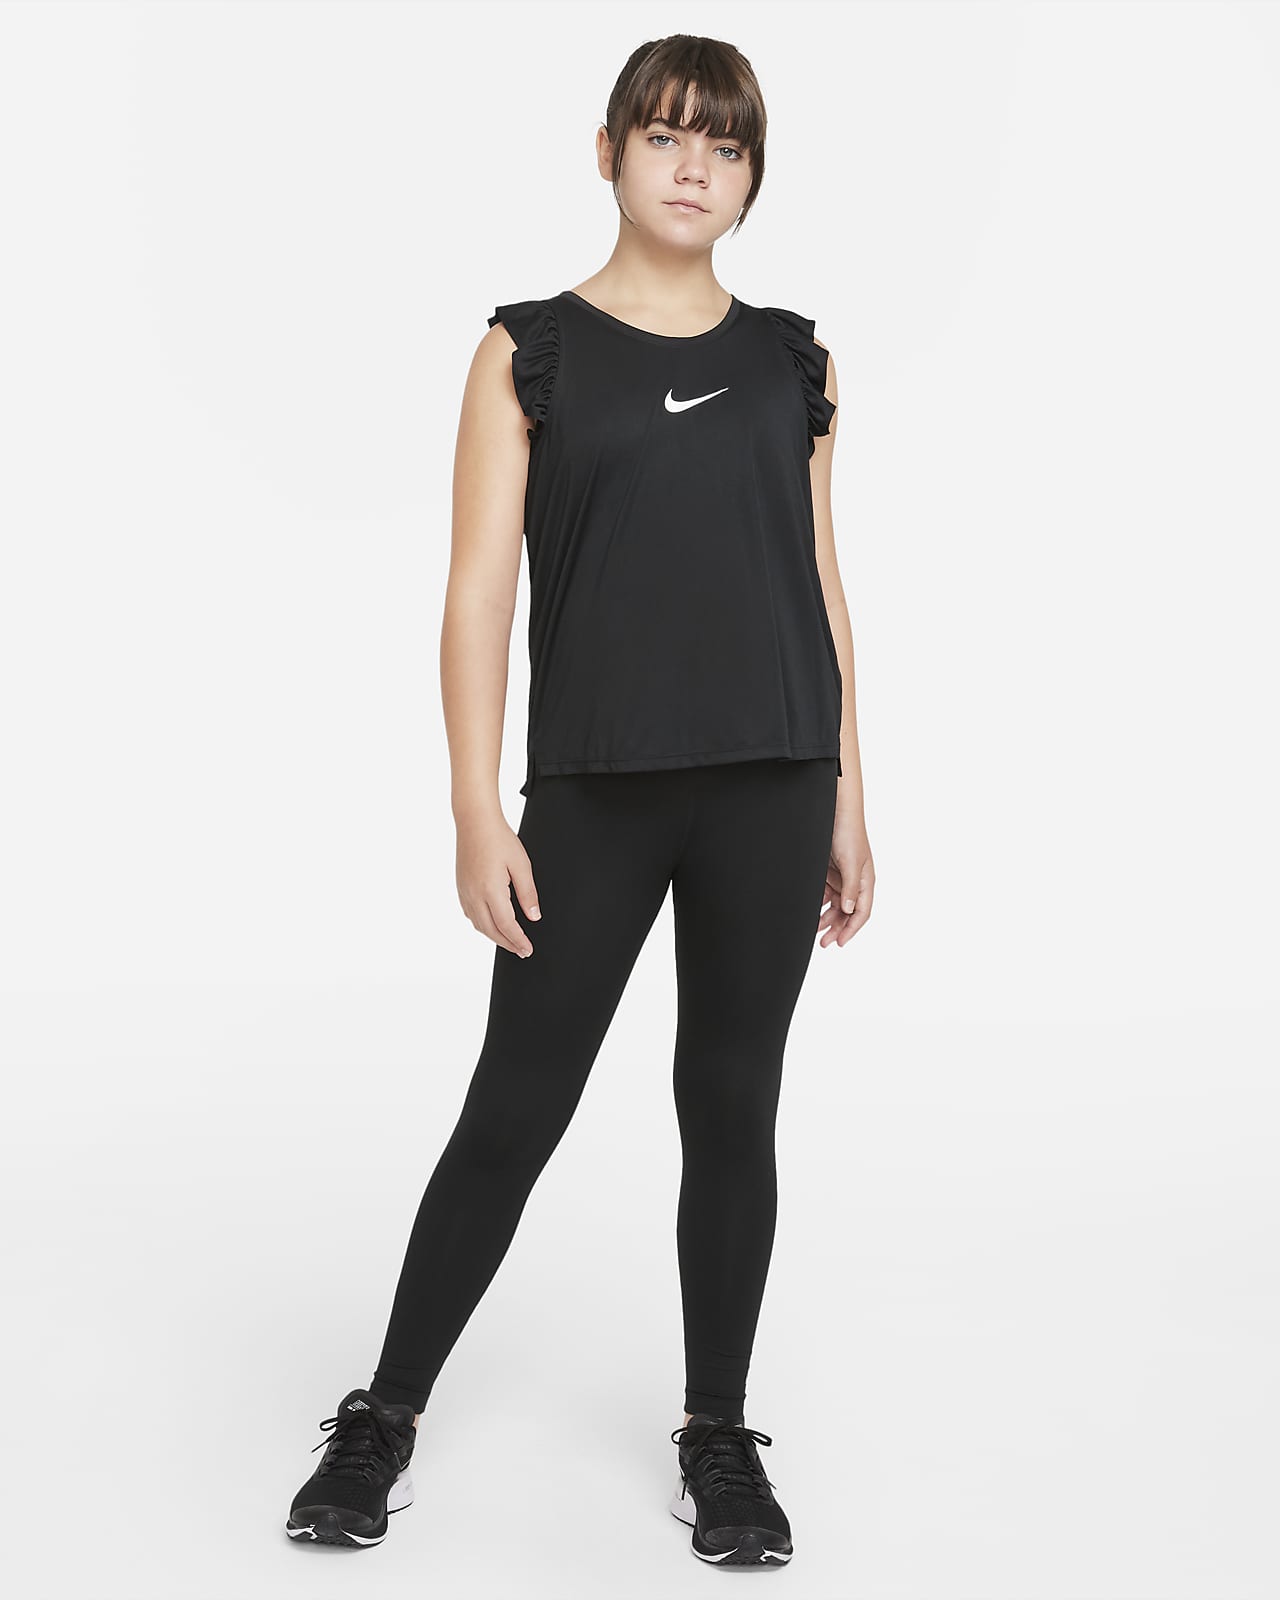 Camiseta tirantes de entrenamiento para niñas Nike One (talla amplia). Nike.com